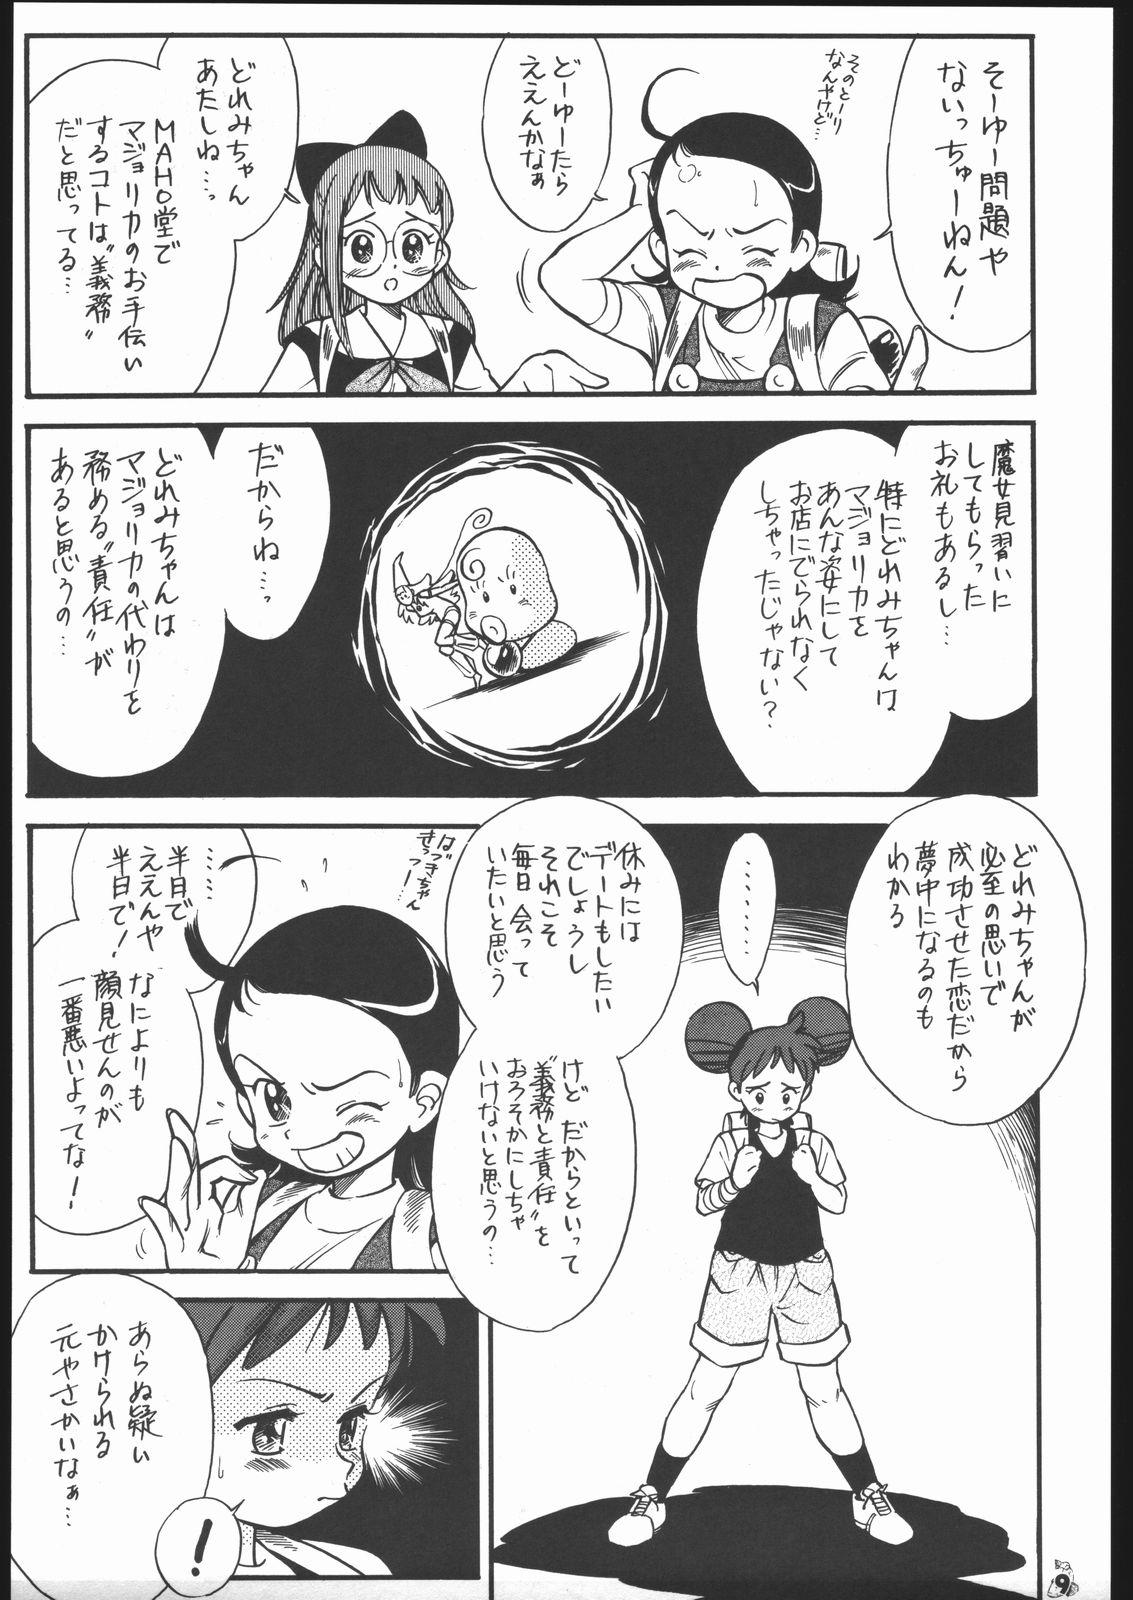 Jerking Off Oudou - Sakura taisen Ojamajo doremi Virtua fighter Escort - Page 8